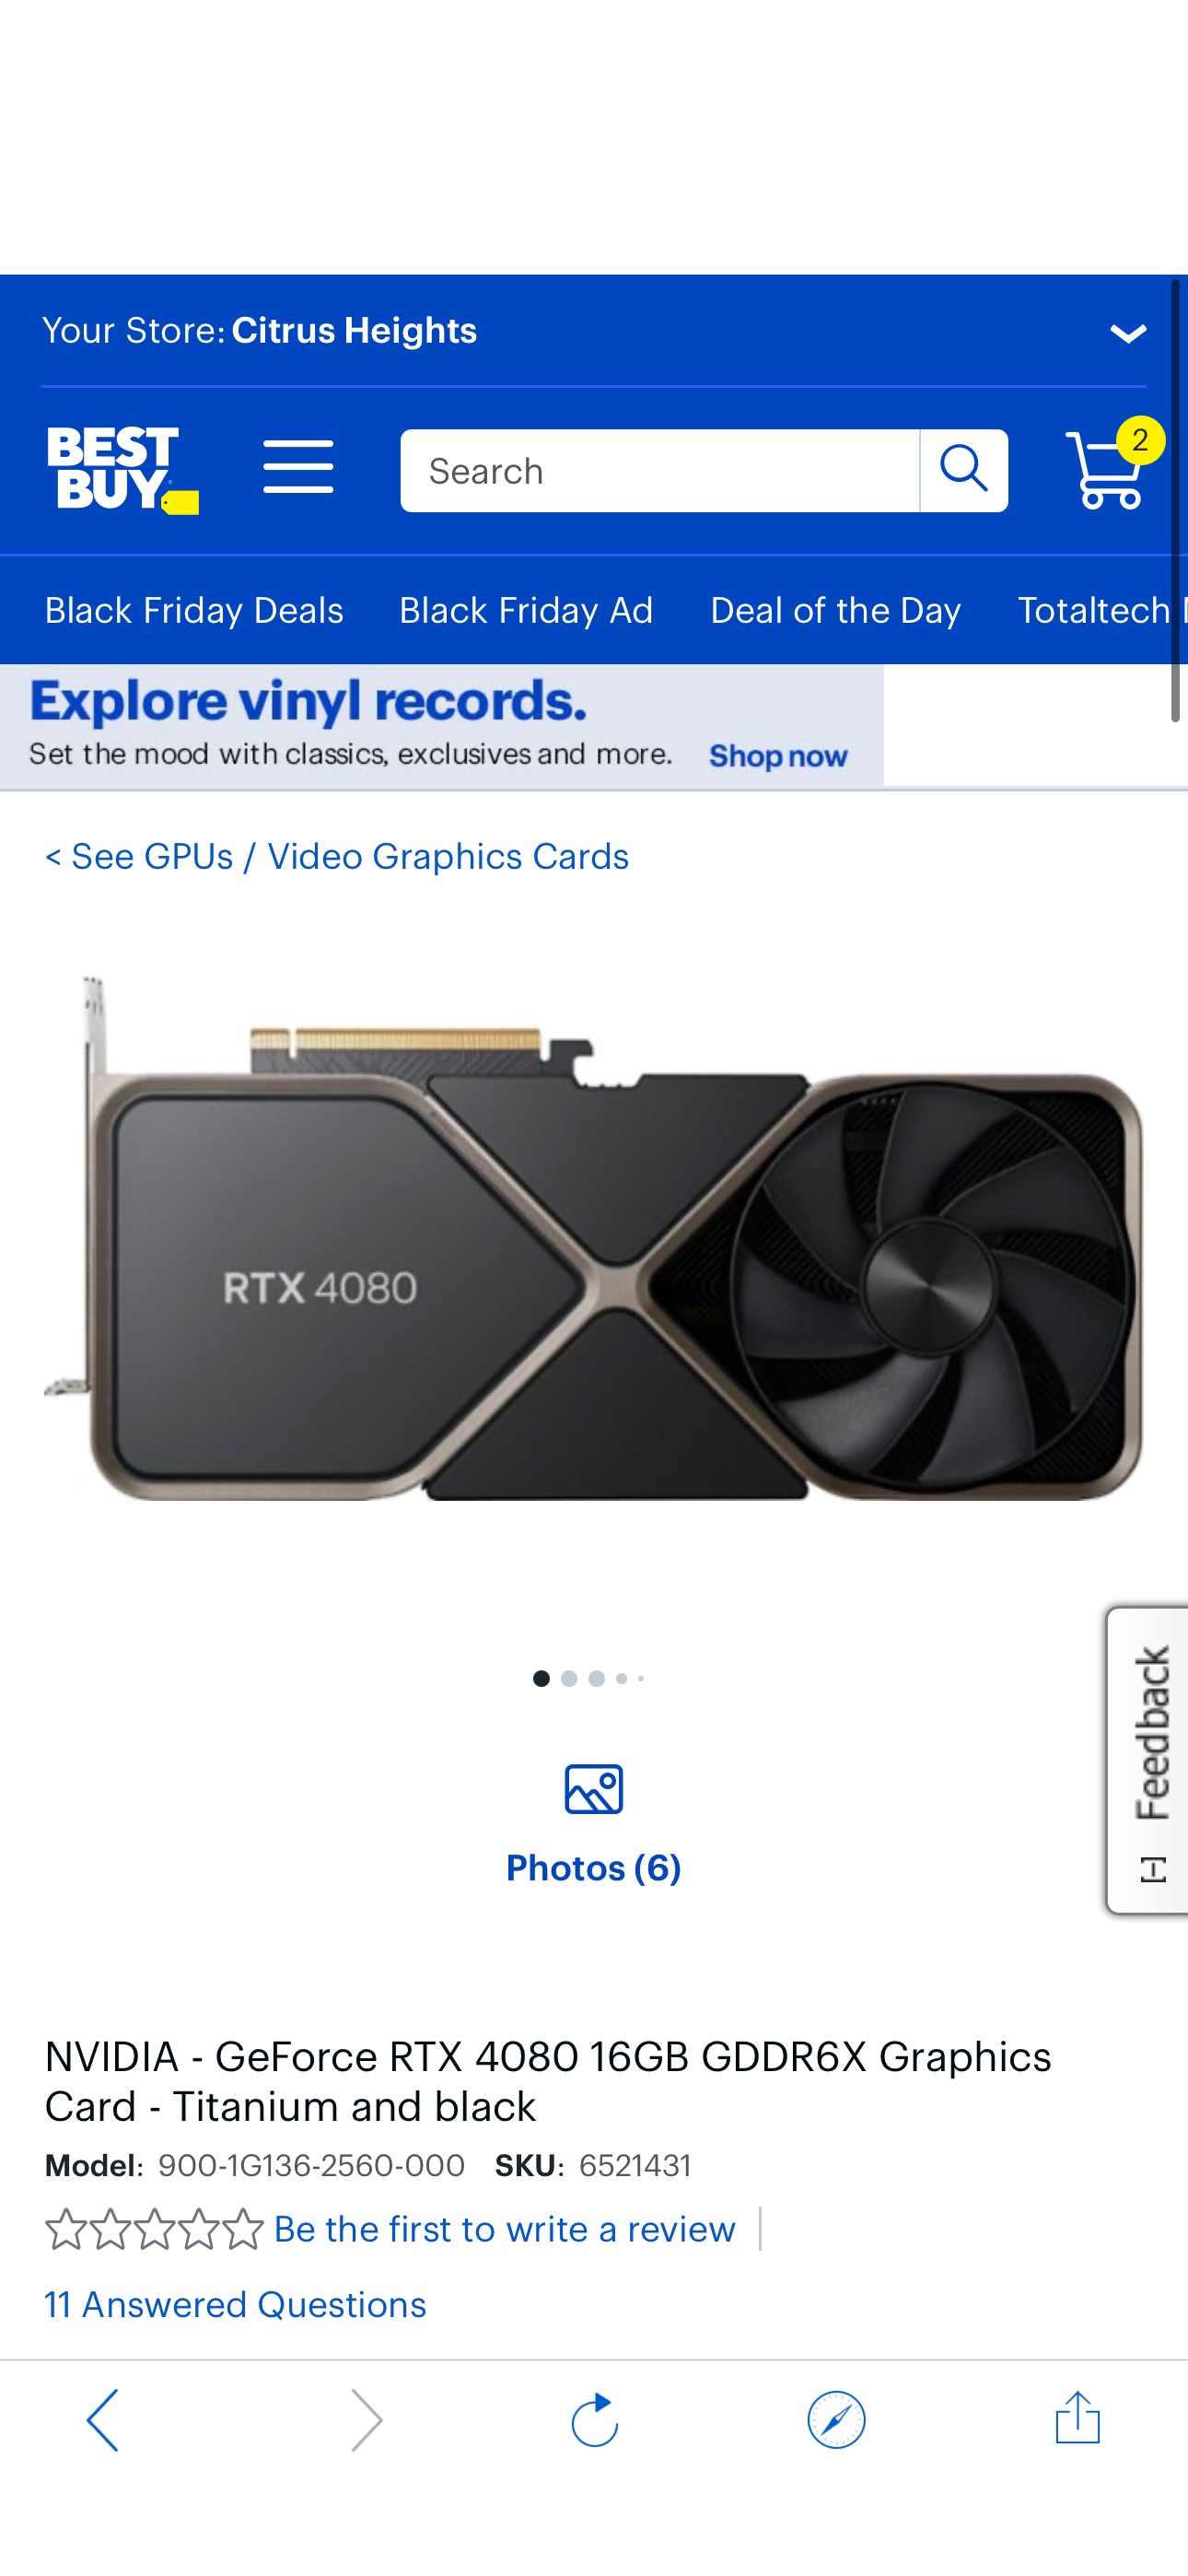 NVIDIA GeForce RTX 4080 16GB GDDR6X Graphics Card Titanium and black 900-1G136-2560-000 - Best Buy